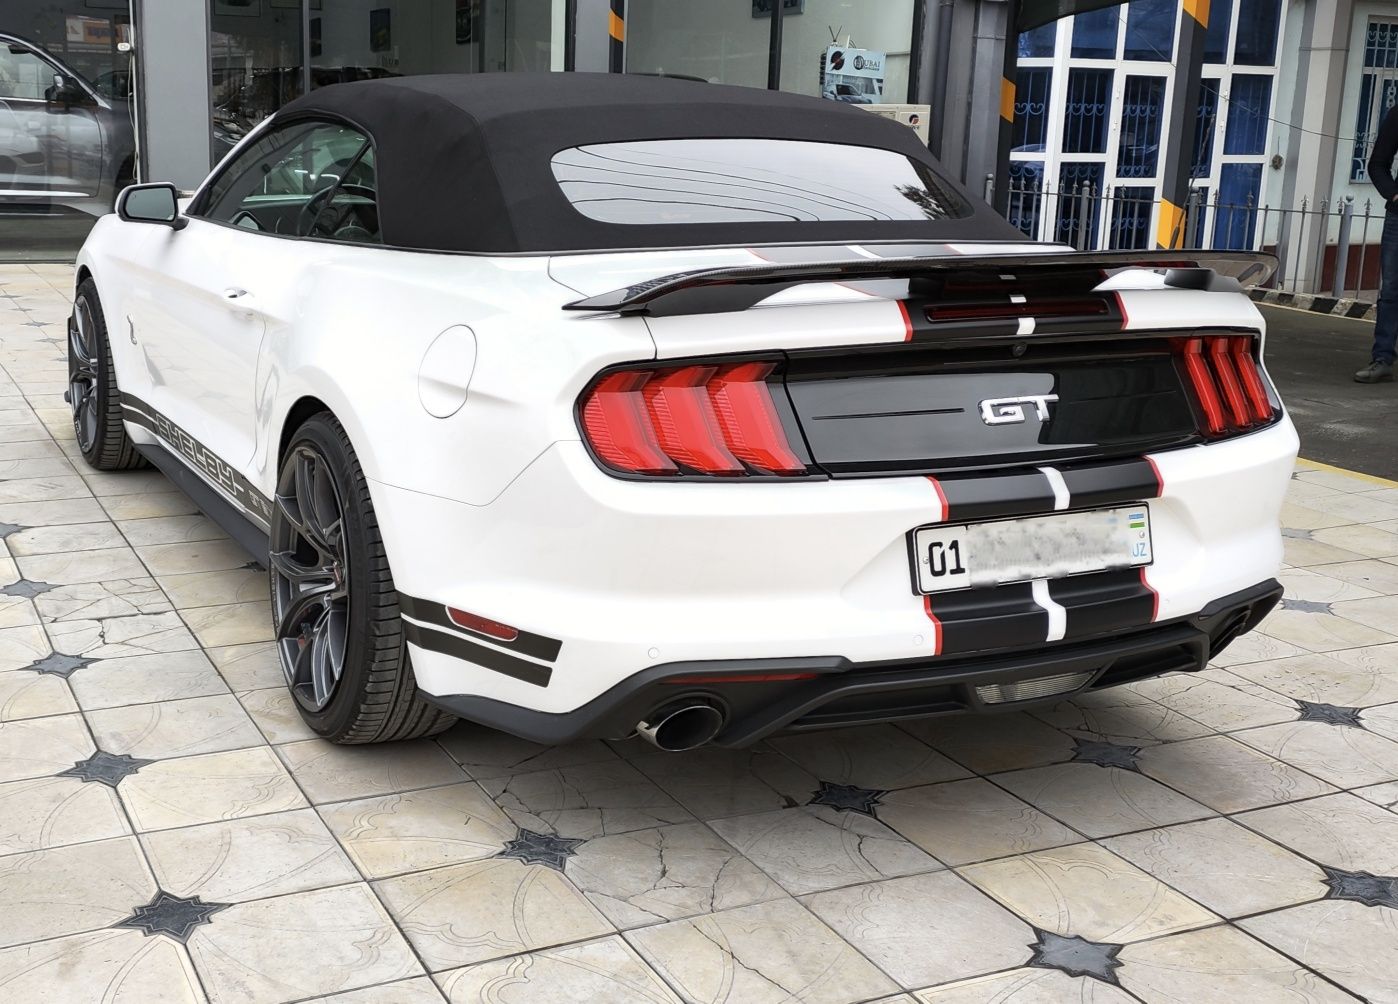 Ford Mustang GT 2021 Shelby body kit cabriolet возможно Бартер